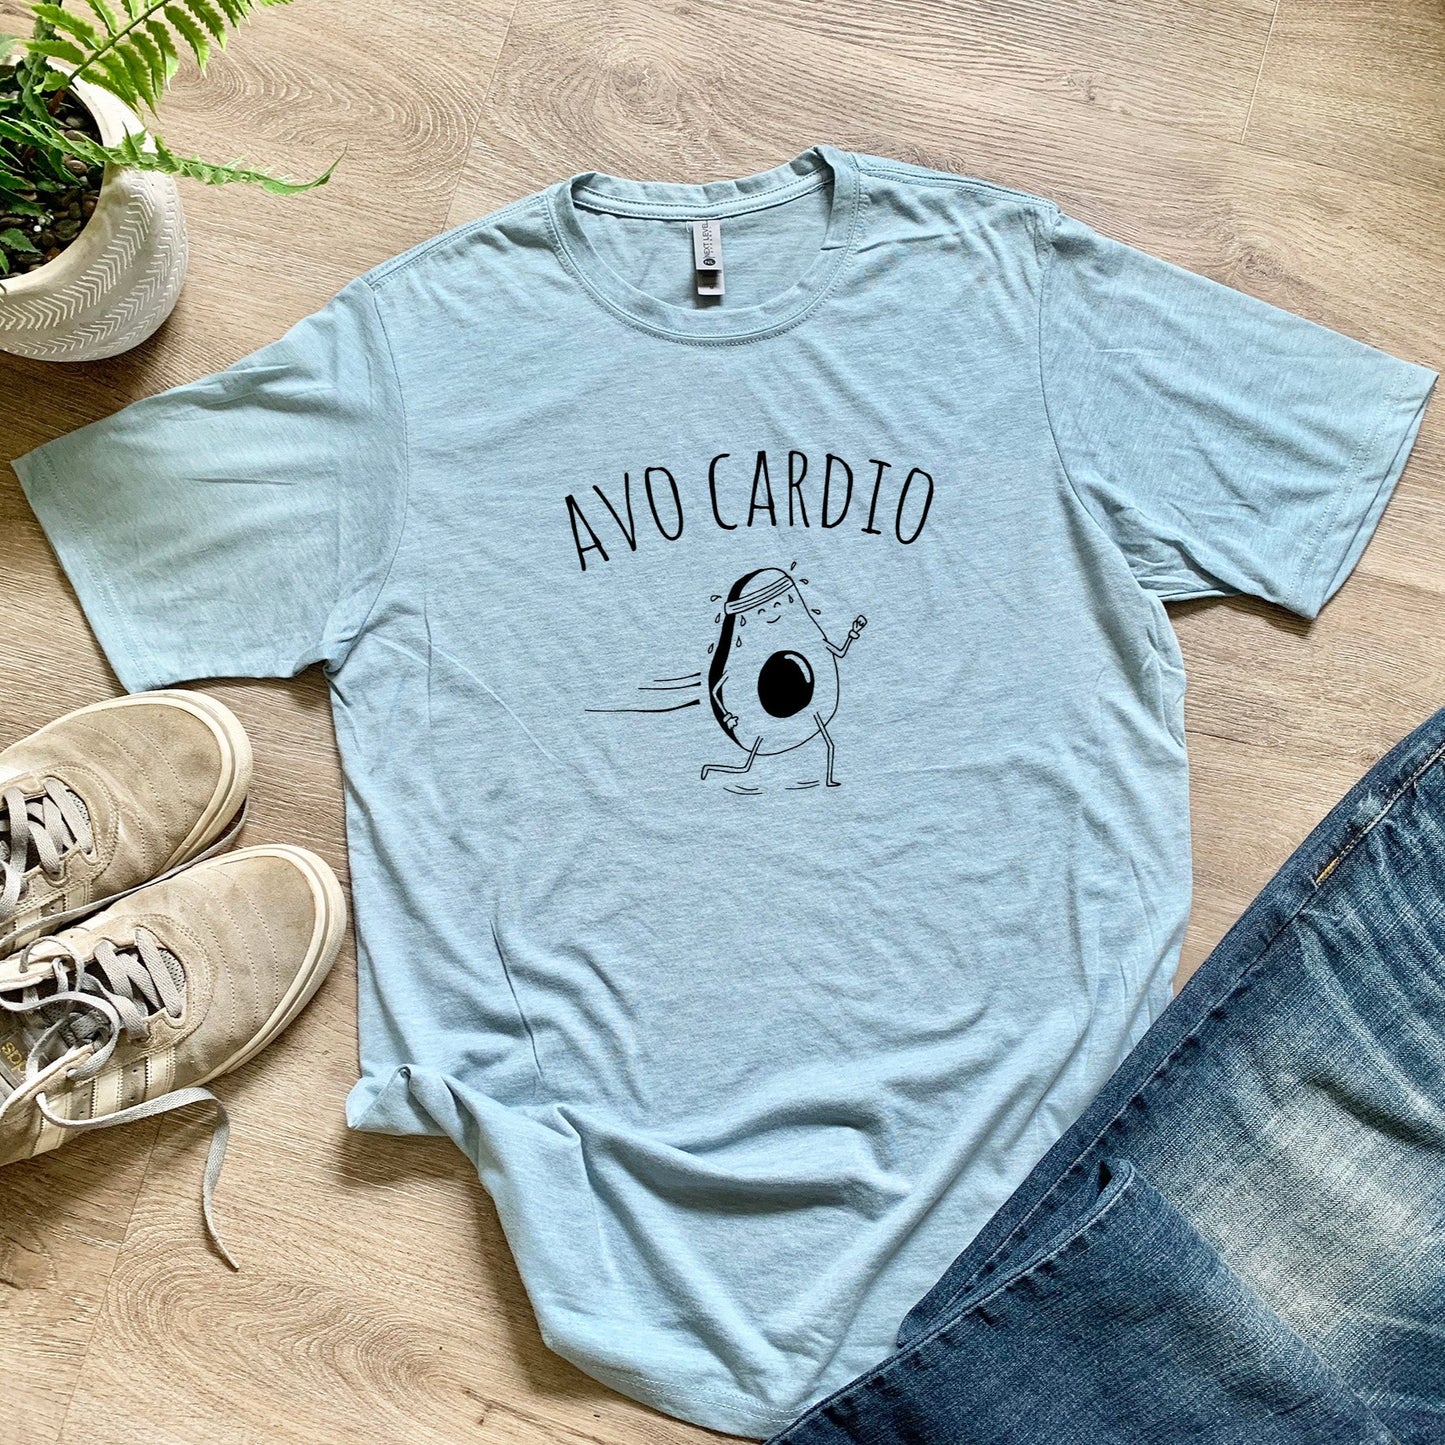 Avo Cardio (Avocado) - Men's / Unisex Tee - Stonewash Blue or Sage